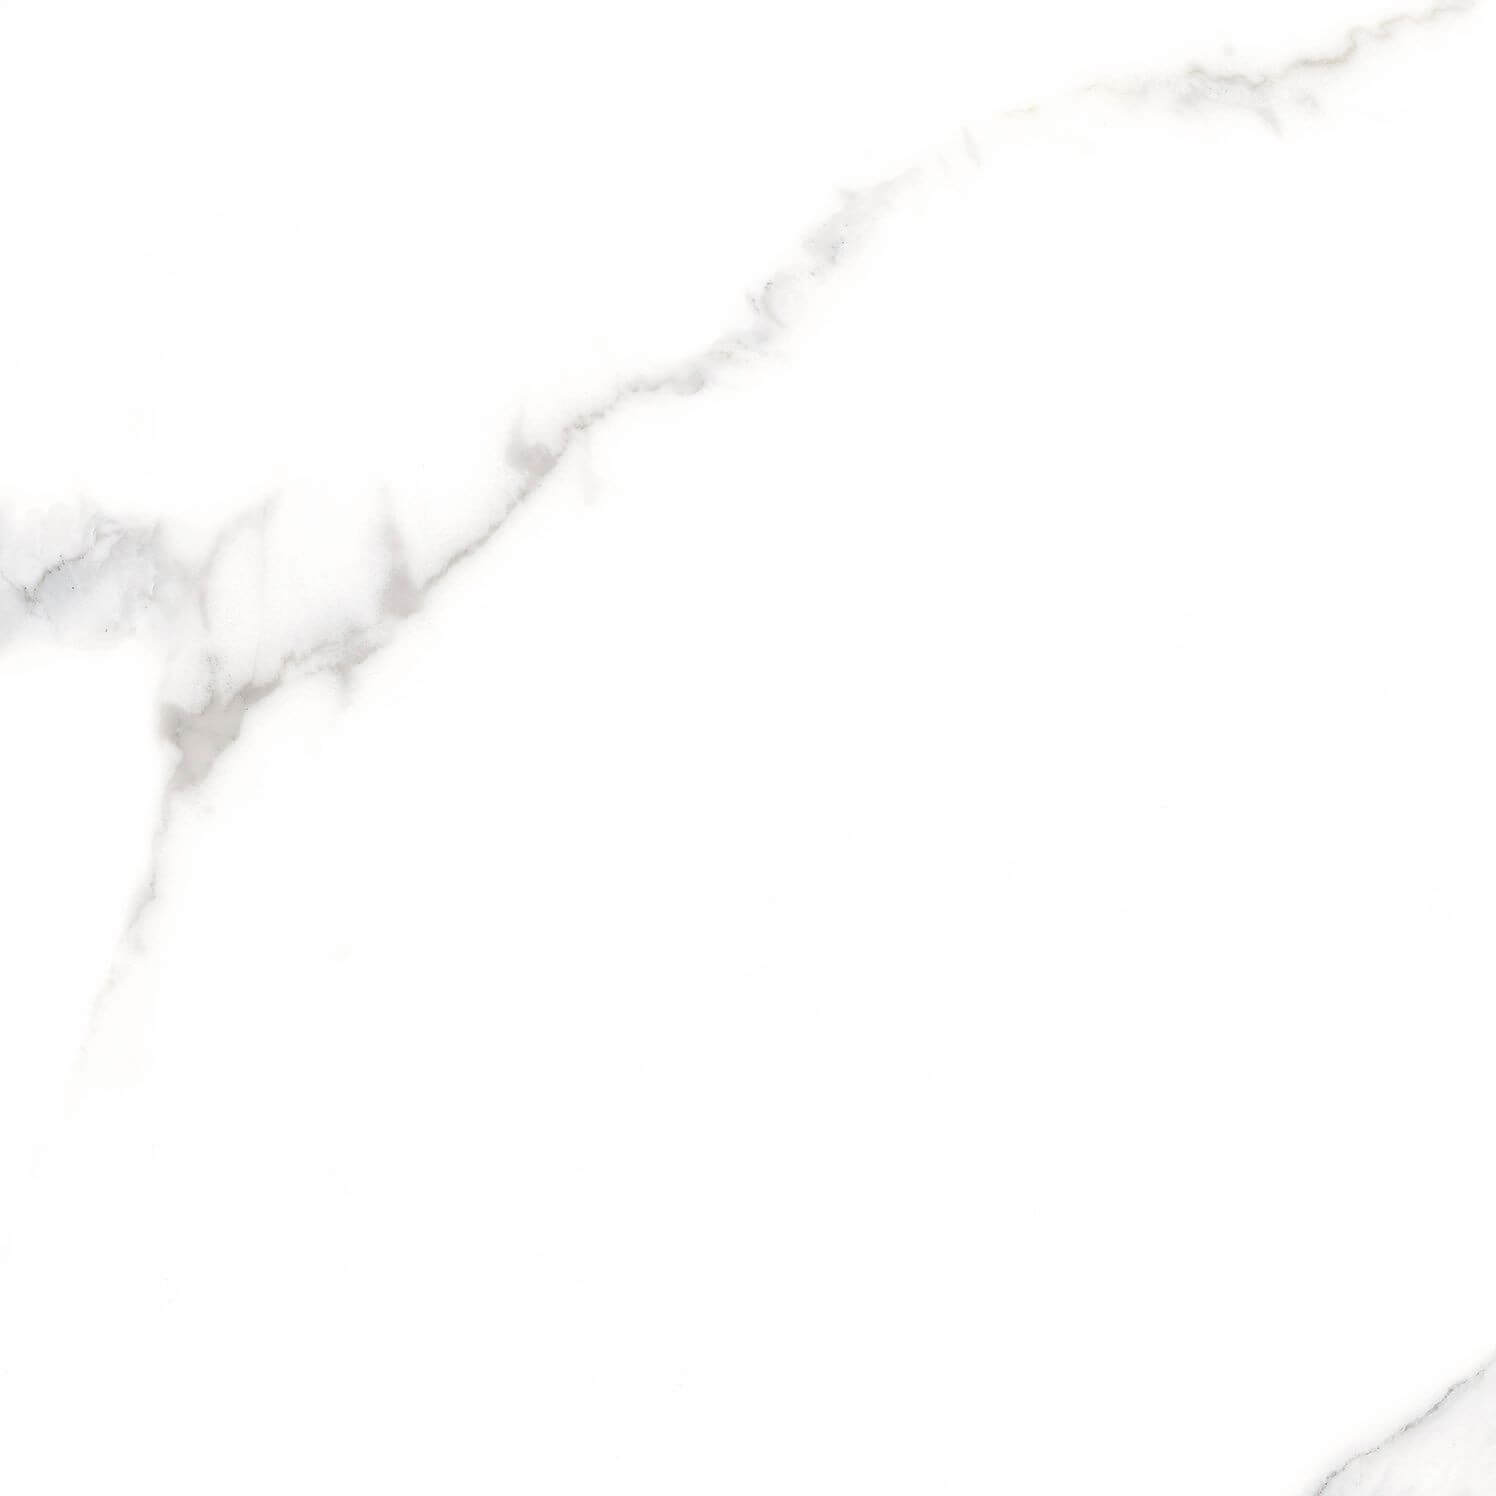 Carrelage sol et mur aspect marbre blanc mat Terni Blanco 25x25 cm